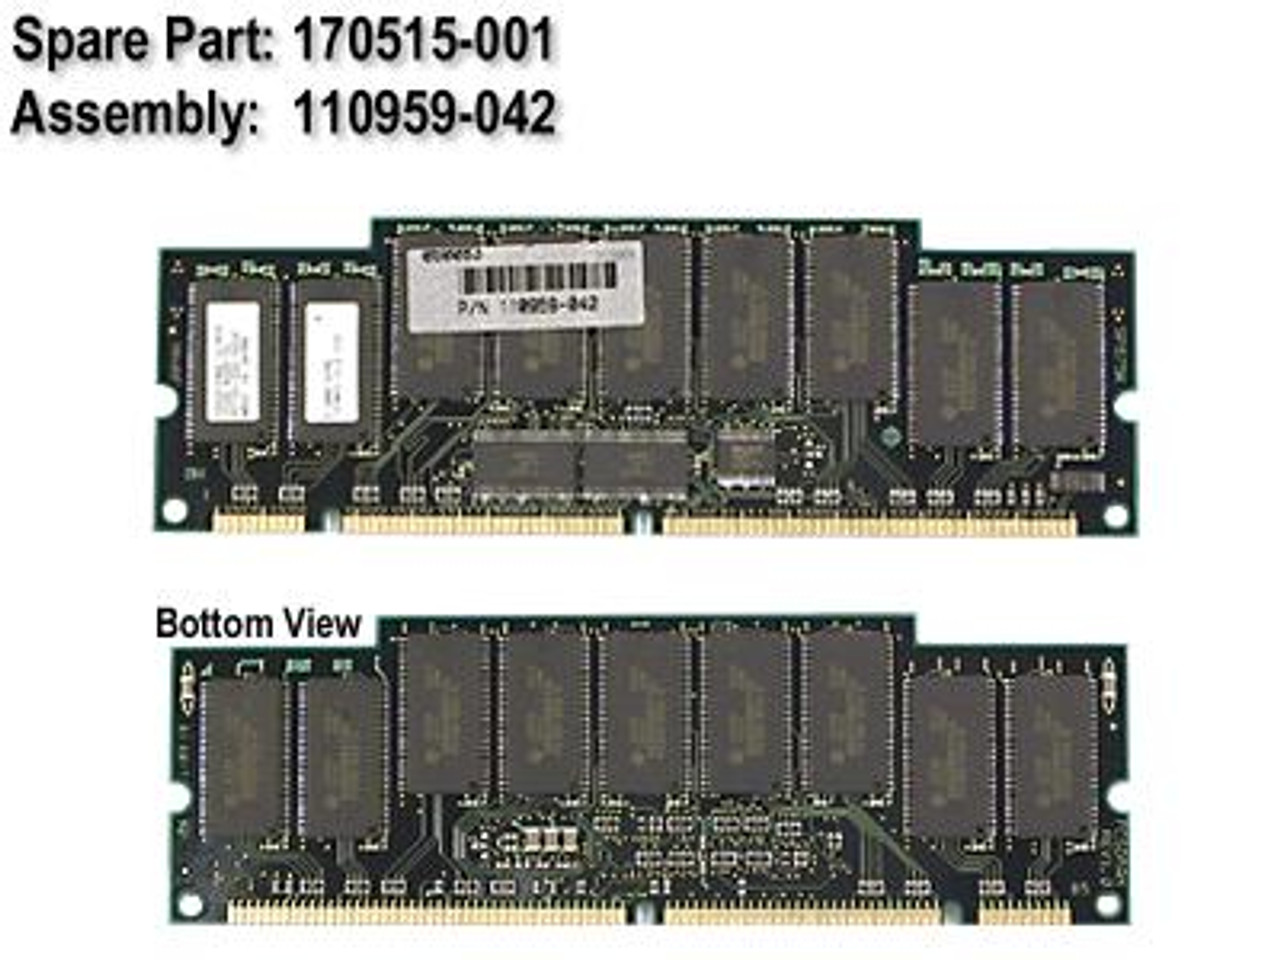 512MB PC100 ECC SDRAM DIMM - 170515-001-REF